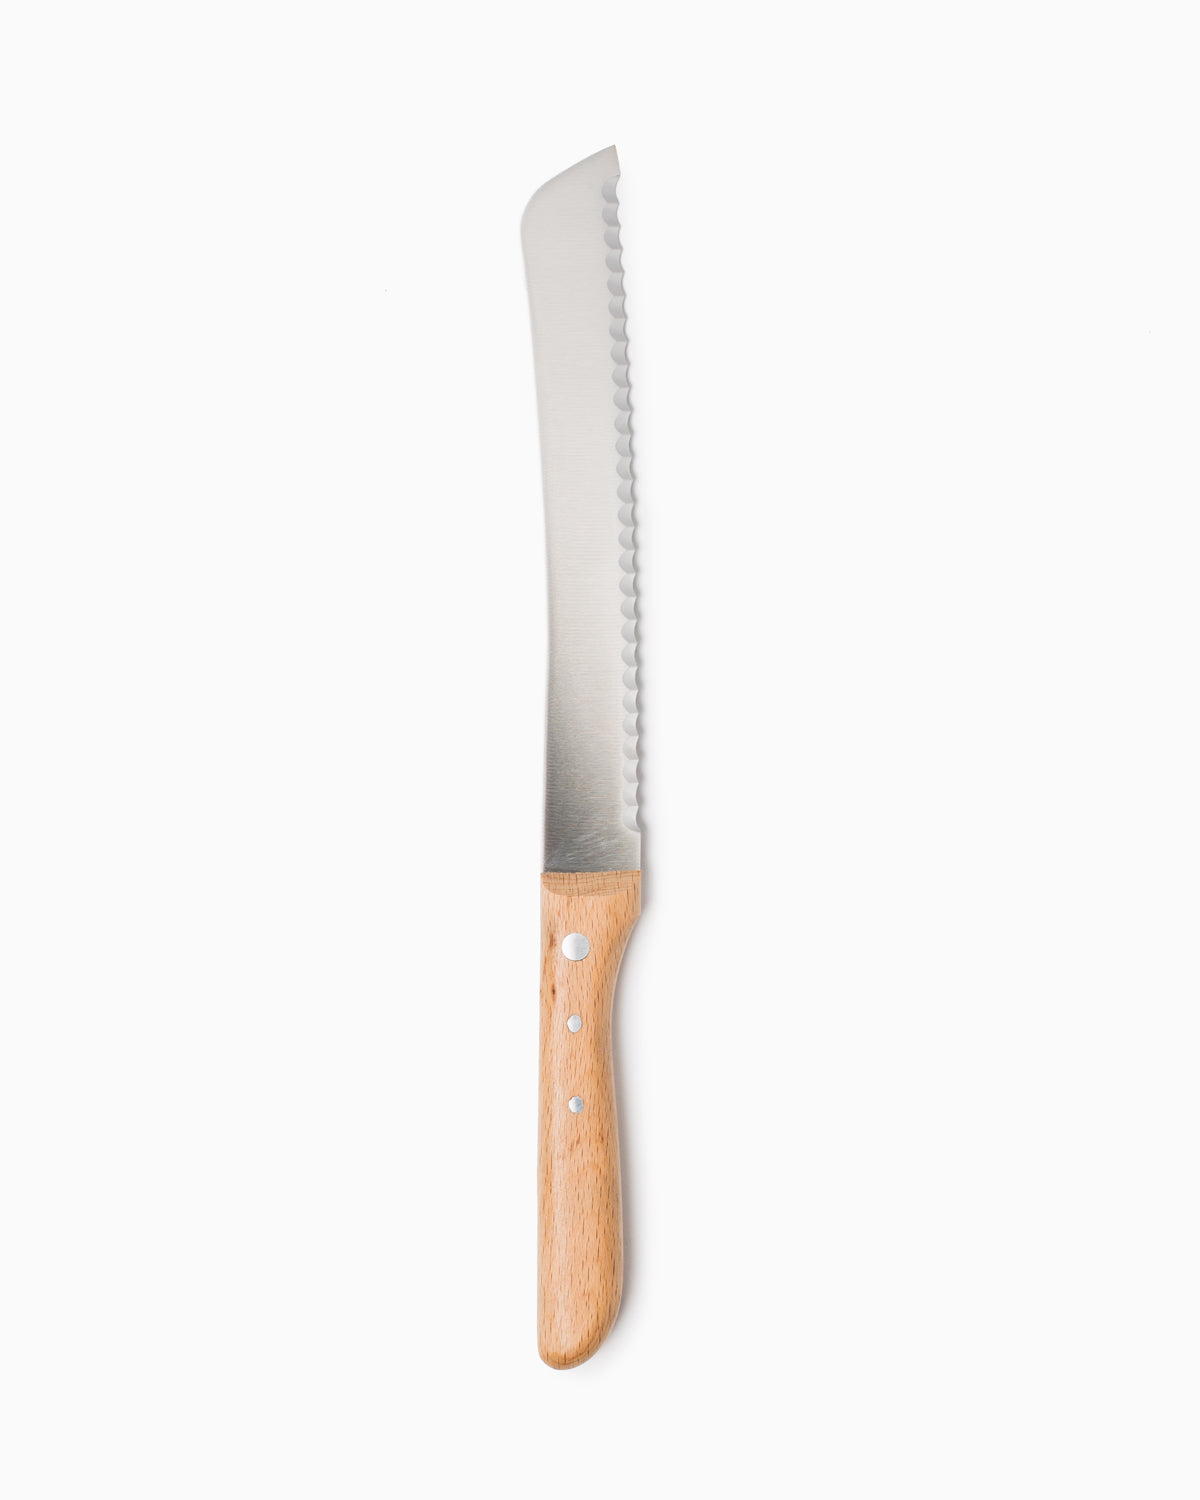 Robert Herder Bread Knife